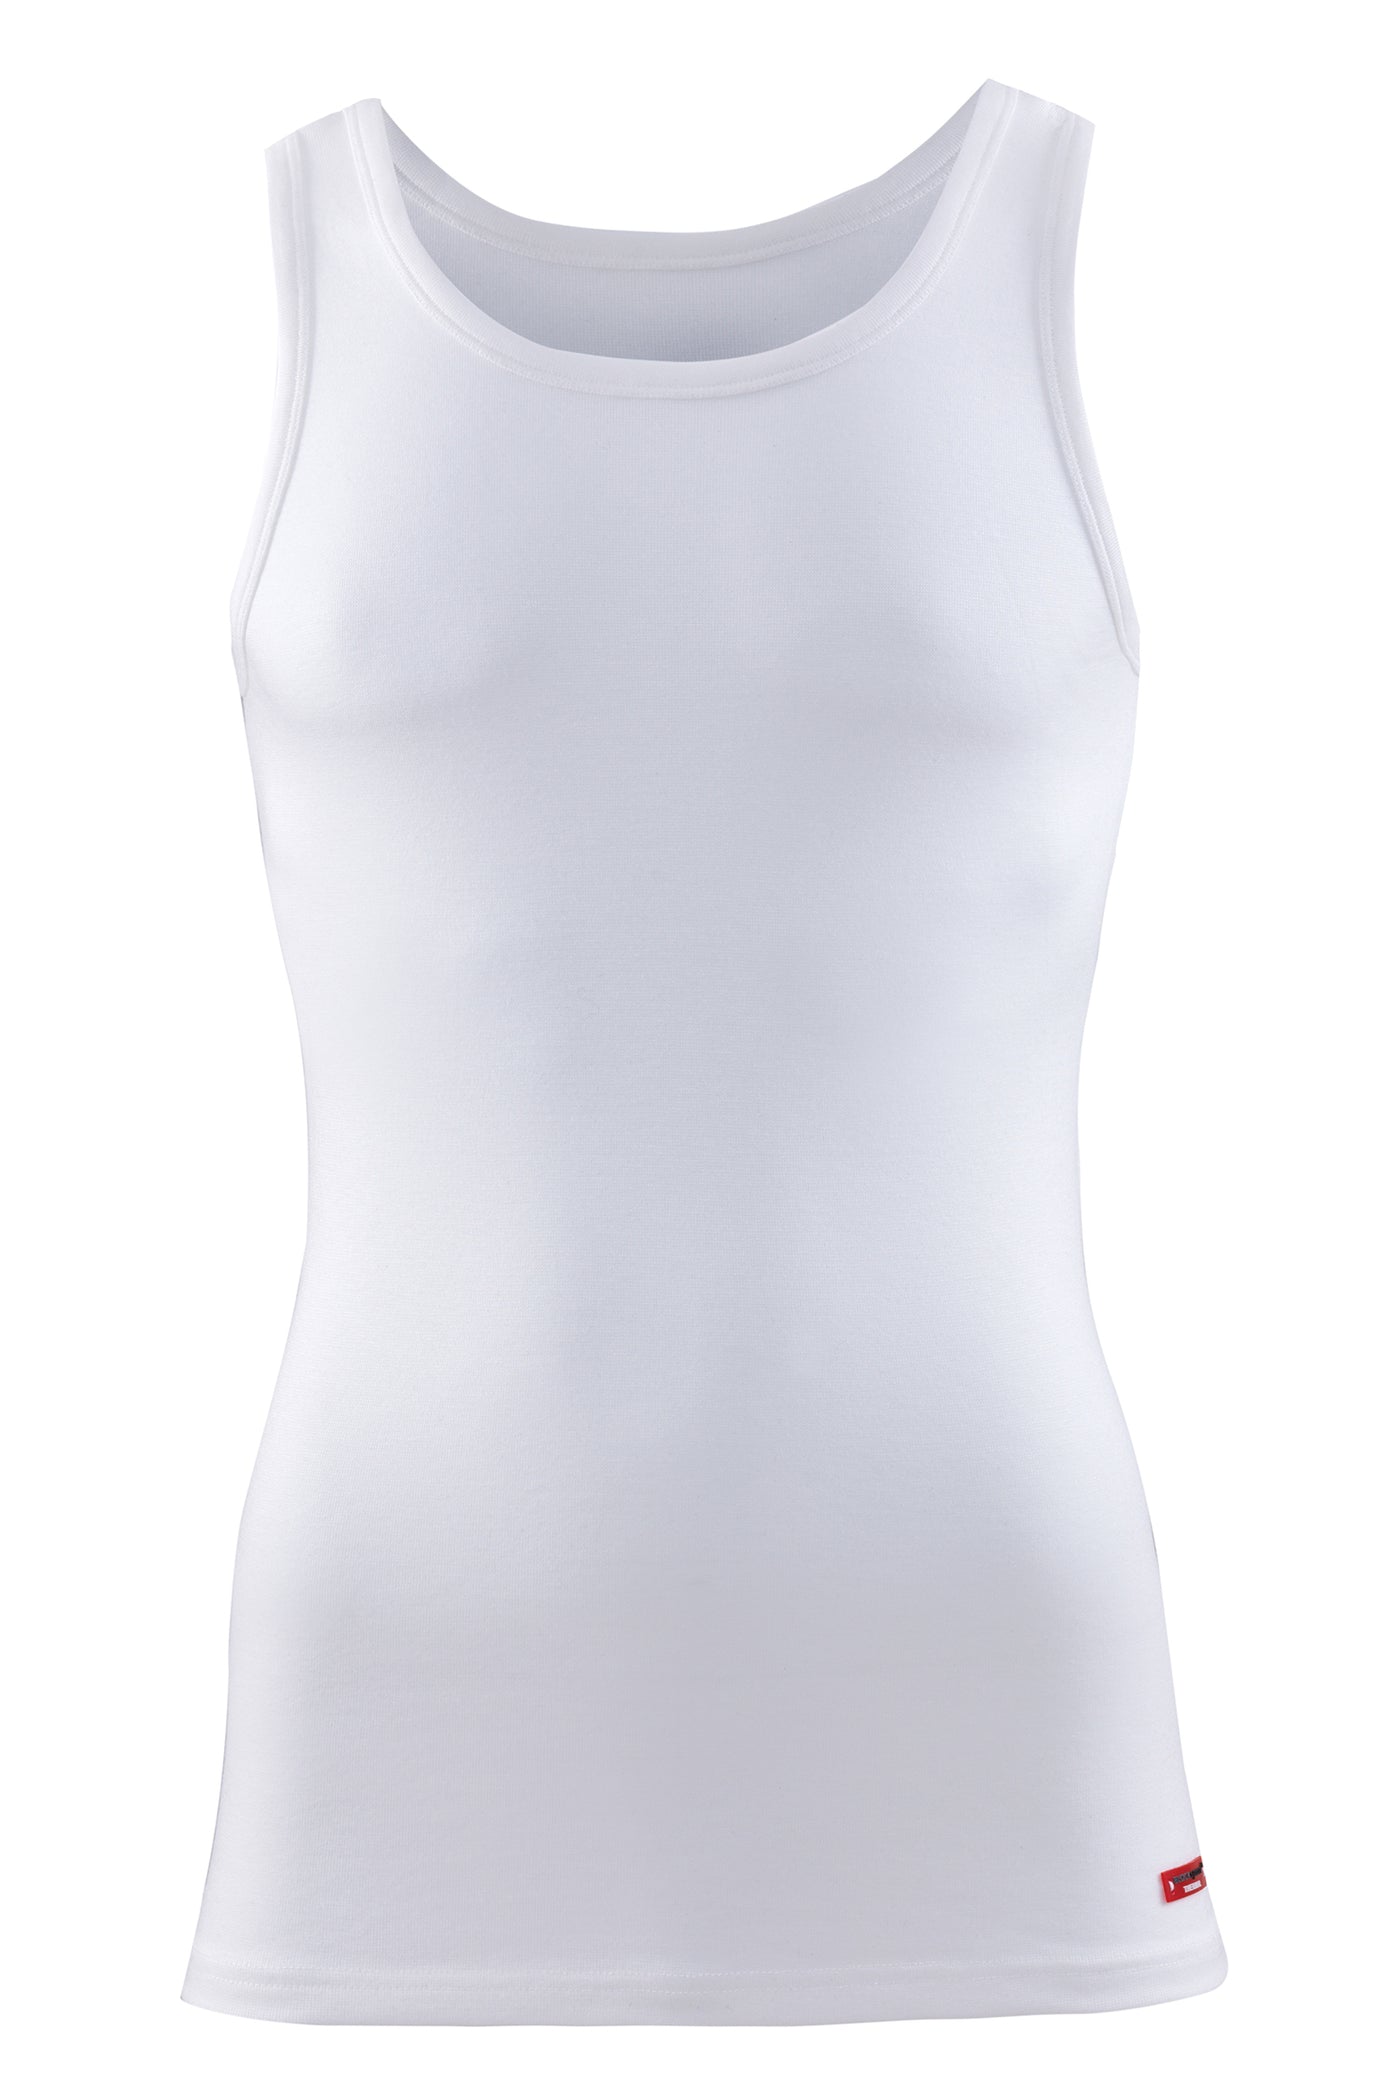 blackspade-Men's thermal singlet-9260, level-2-underwear-white